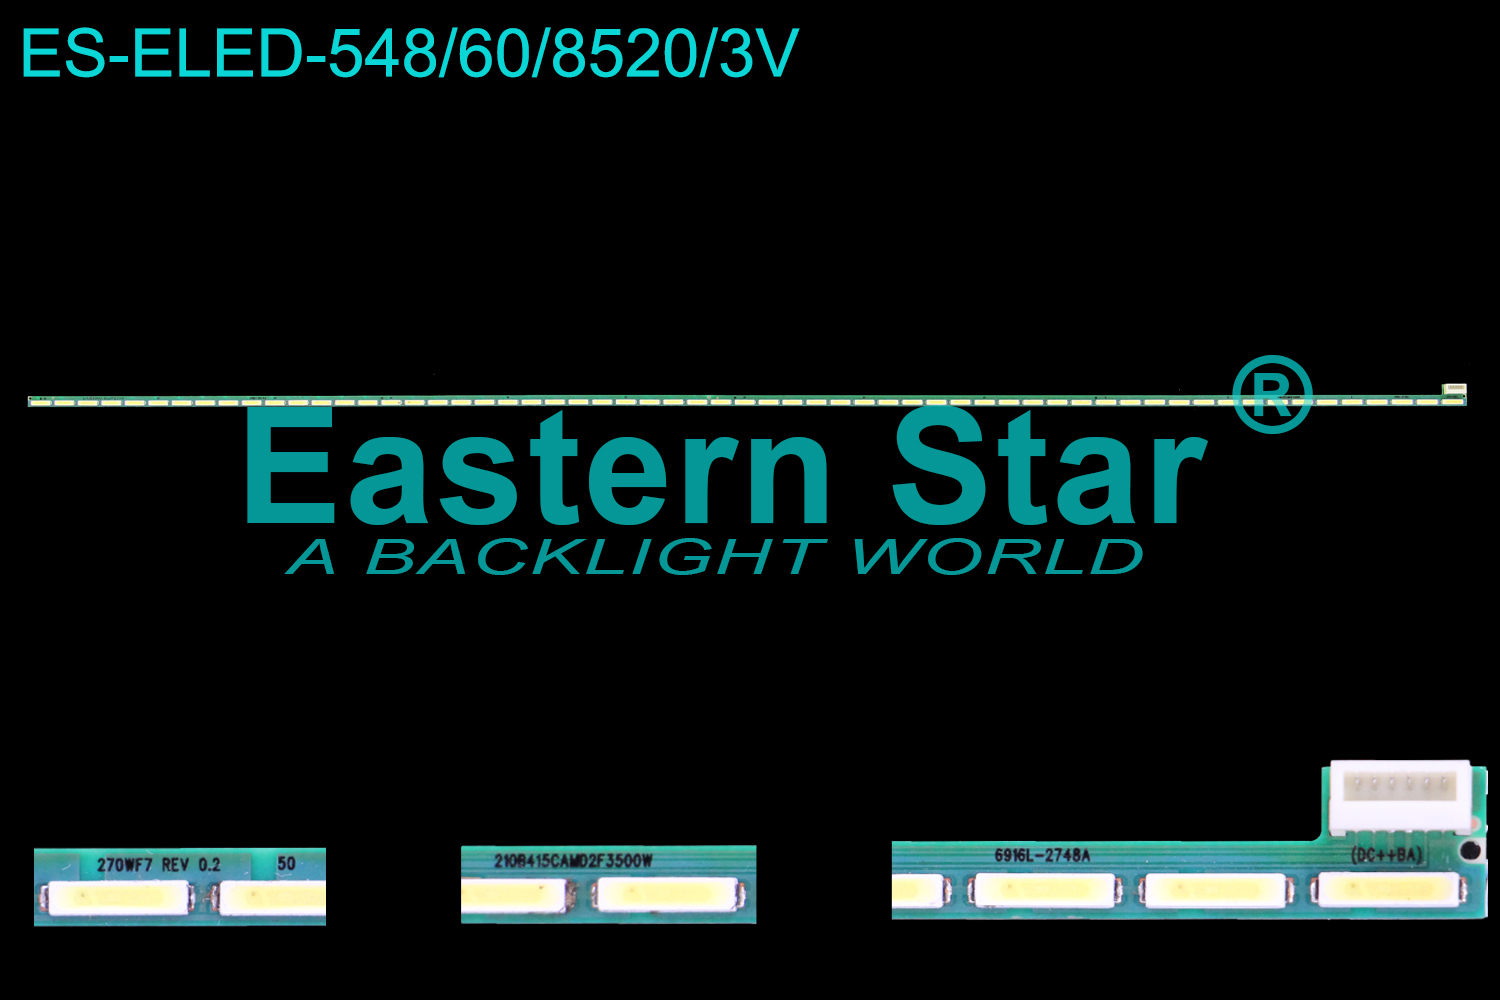 ES-ELED-548 ELED/EDGE TV backlight use for 27'' PHILIPS  273V7Q  210B415CAMD2F3500W 270EF7 REV 0.2 6919L-2748A 6916L-2941C  LED STRIPS(1)